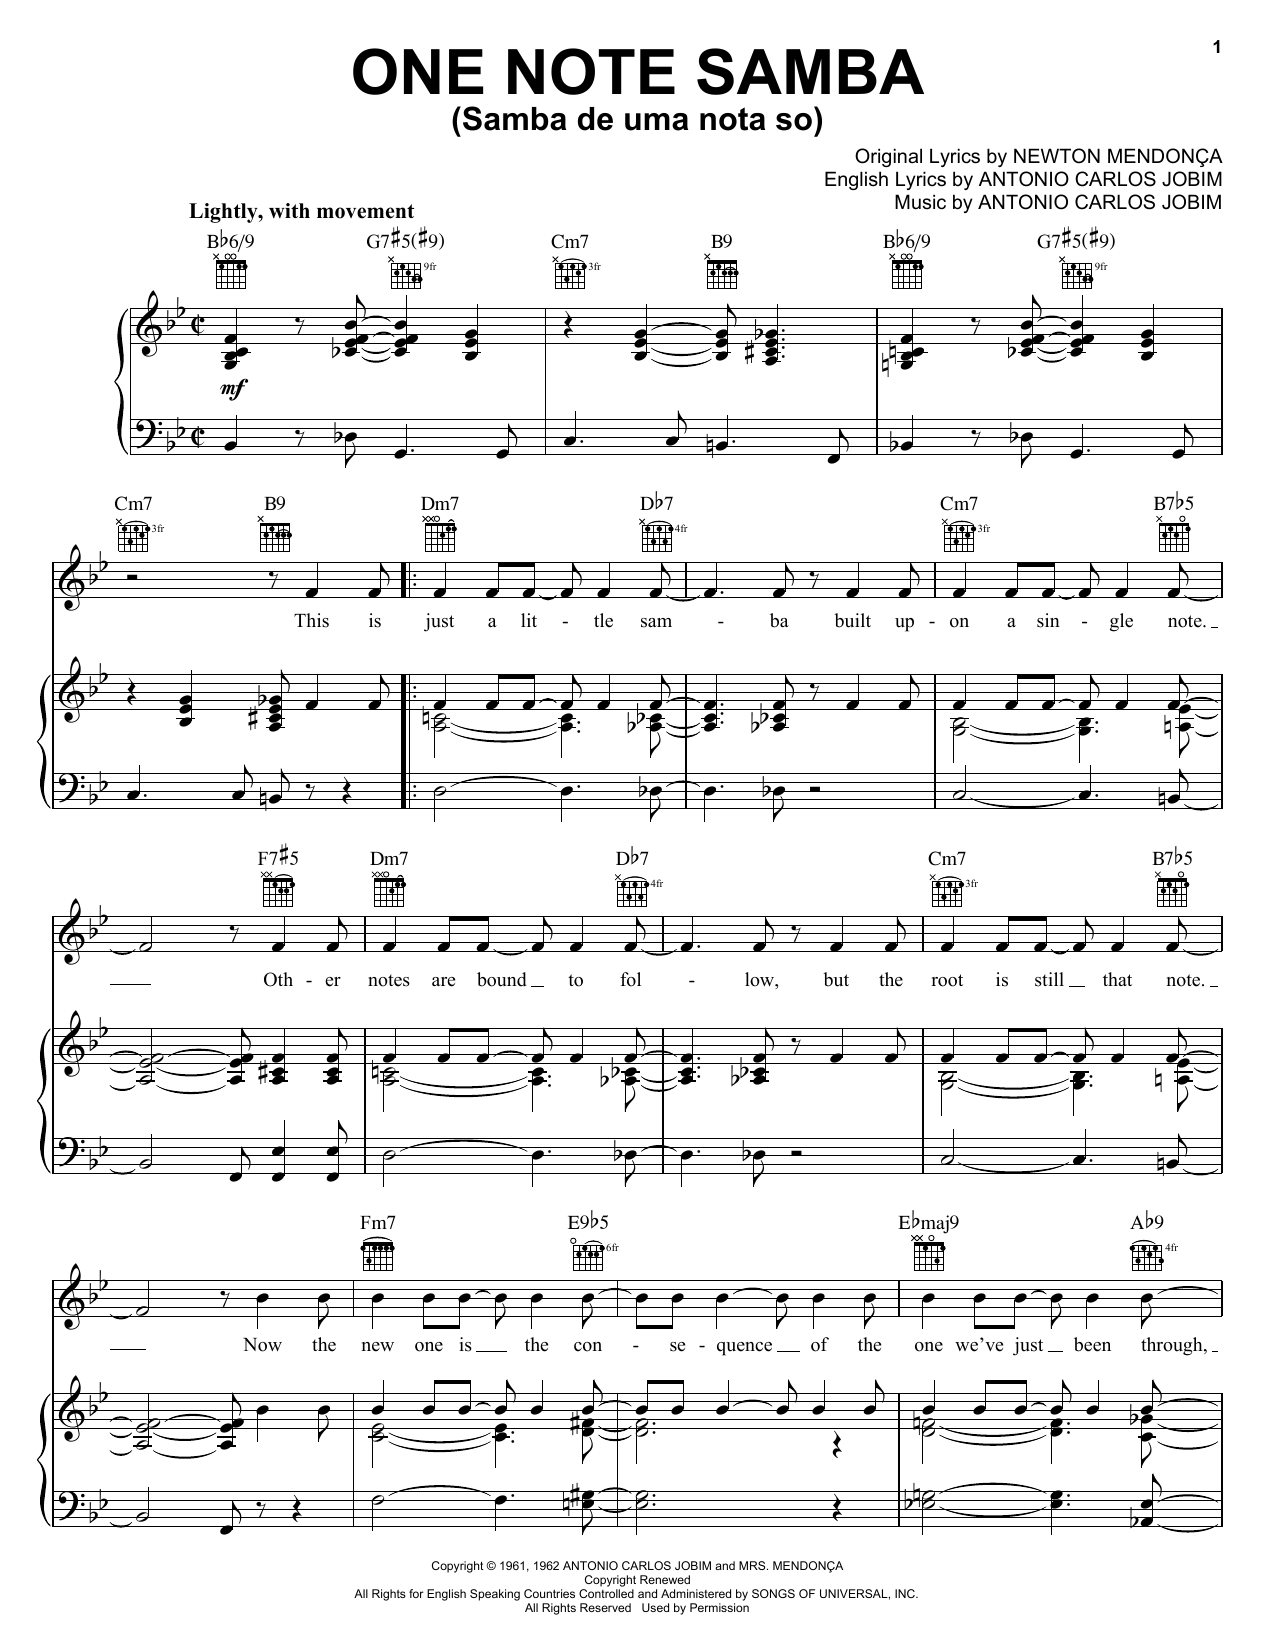 Antonio Carlos Jobim One Note Samba (Samba De Uma Nota So) Sheet Music Notes & Chords for Voice - Download or Print PDF